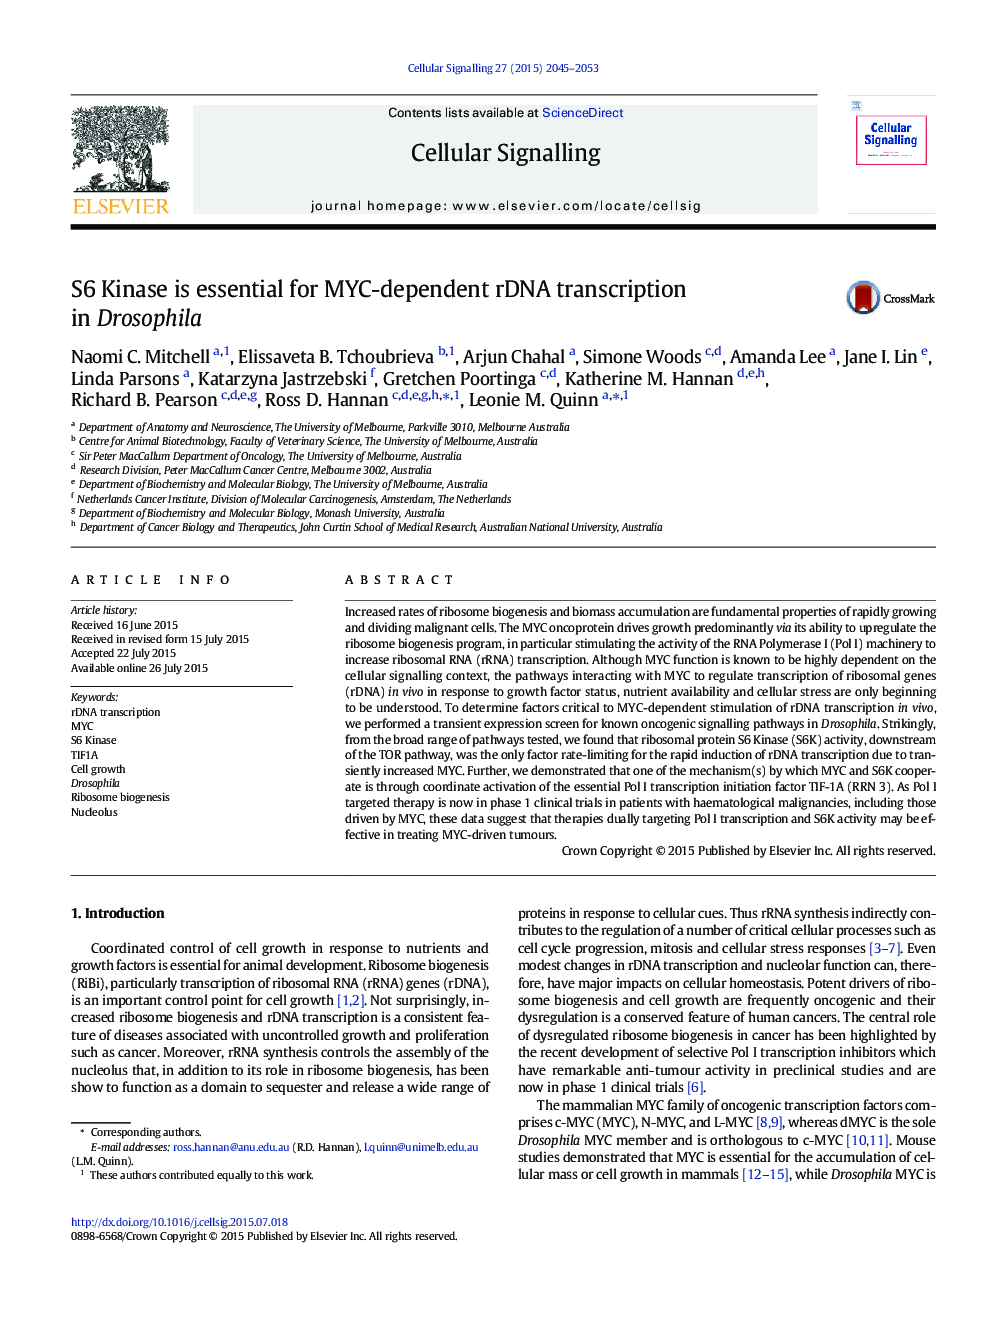 S6 Kinase is essential for MYC-dependent rDNA transcription in Drosophila